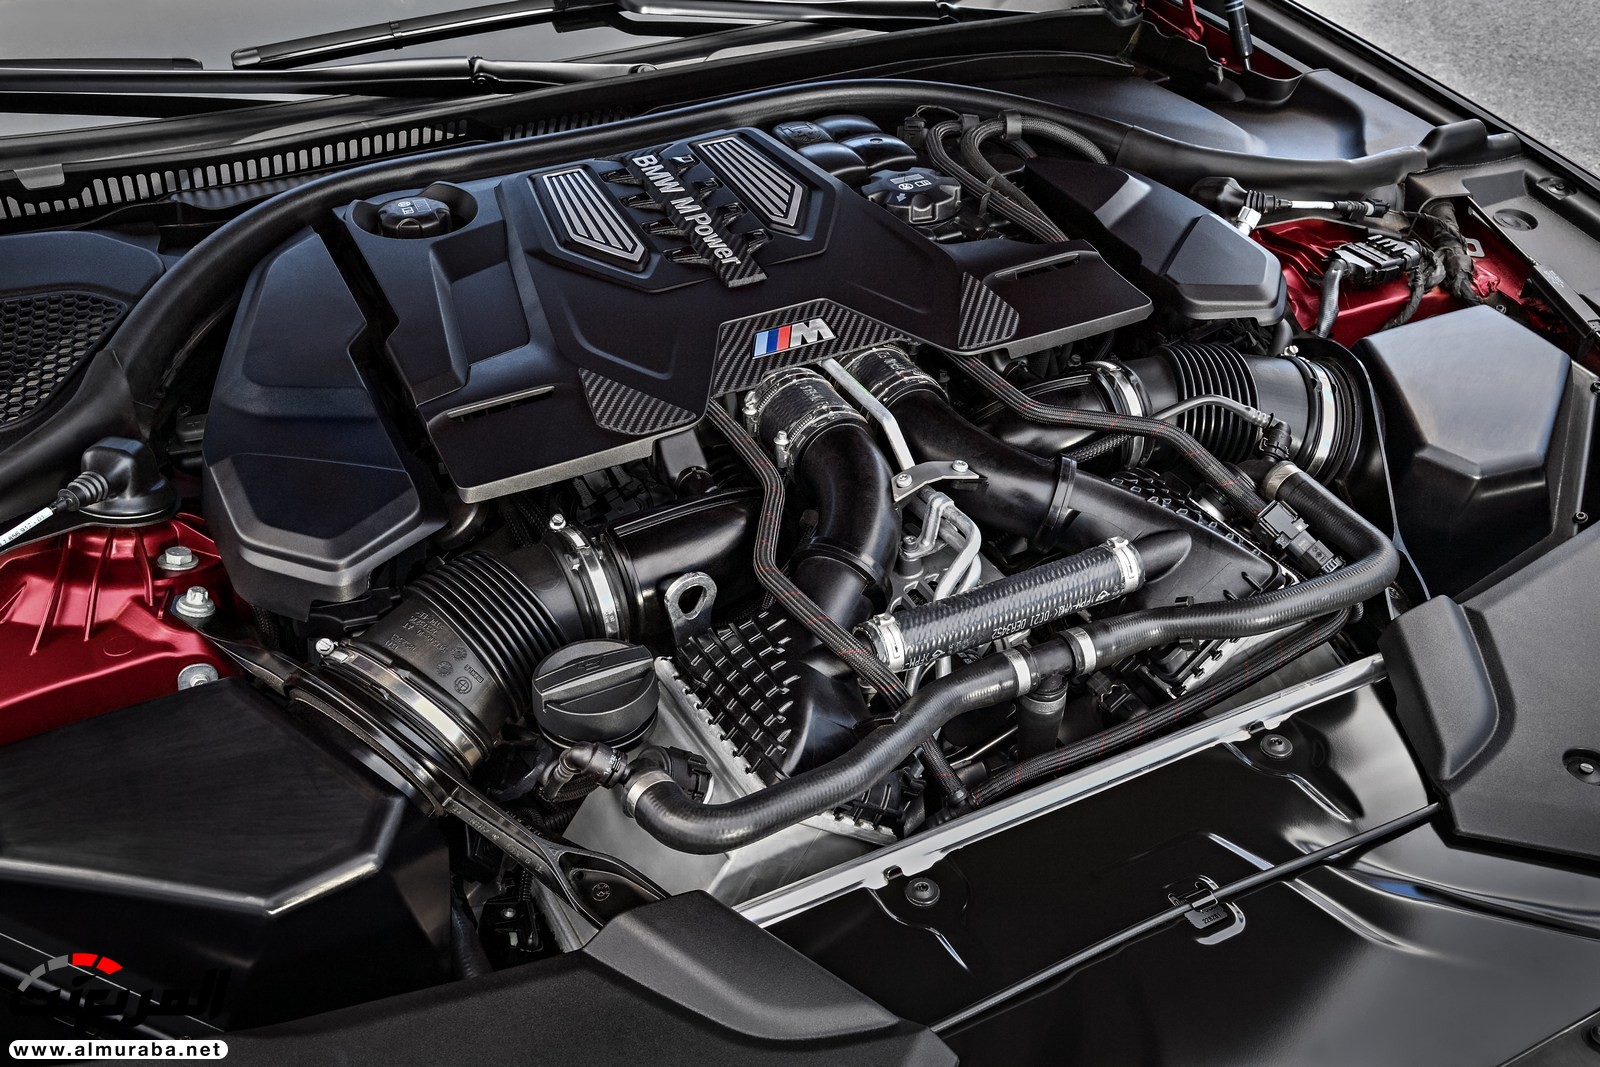 بي ام دبليو M5 2018 تكشف نفسها رسمياً بقوة ٦٠٠ حصان "صور ومواصفات" BMW 186